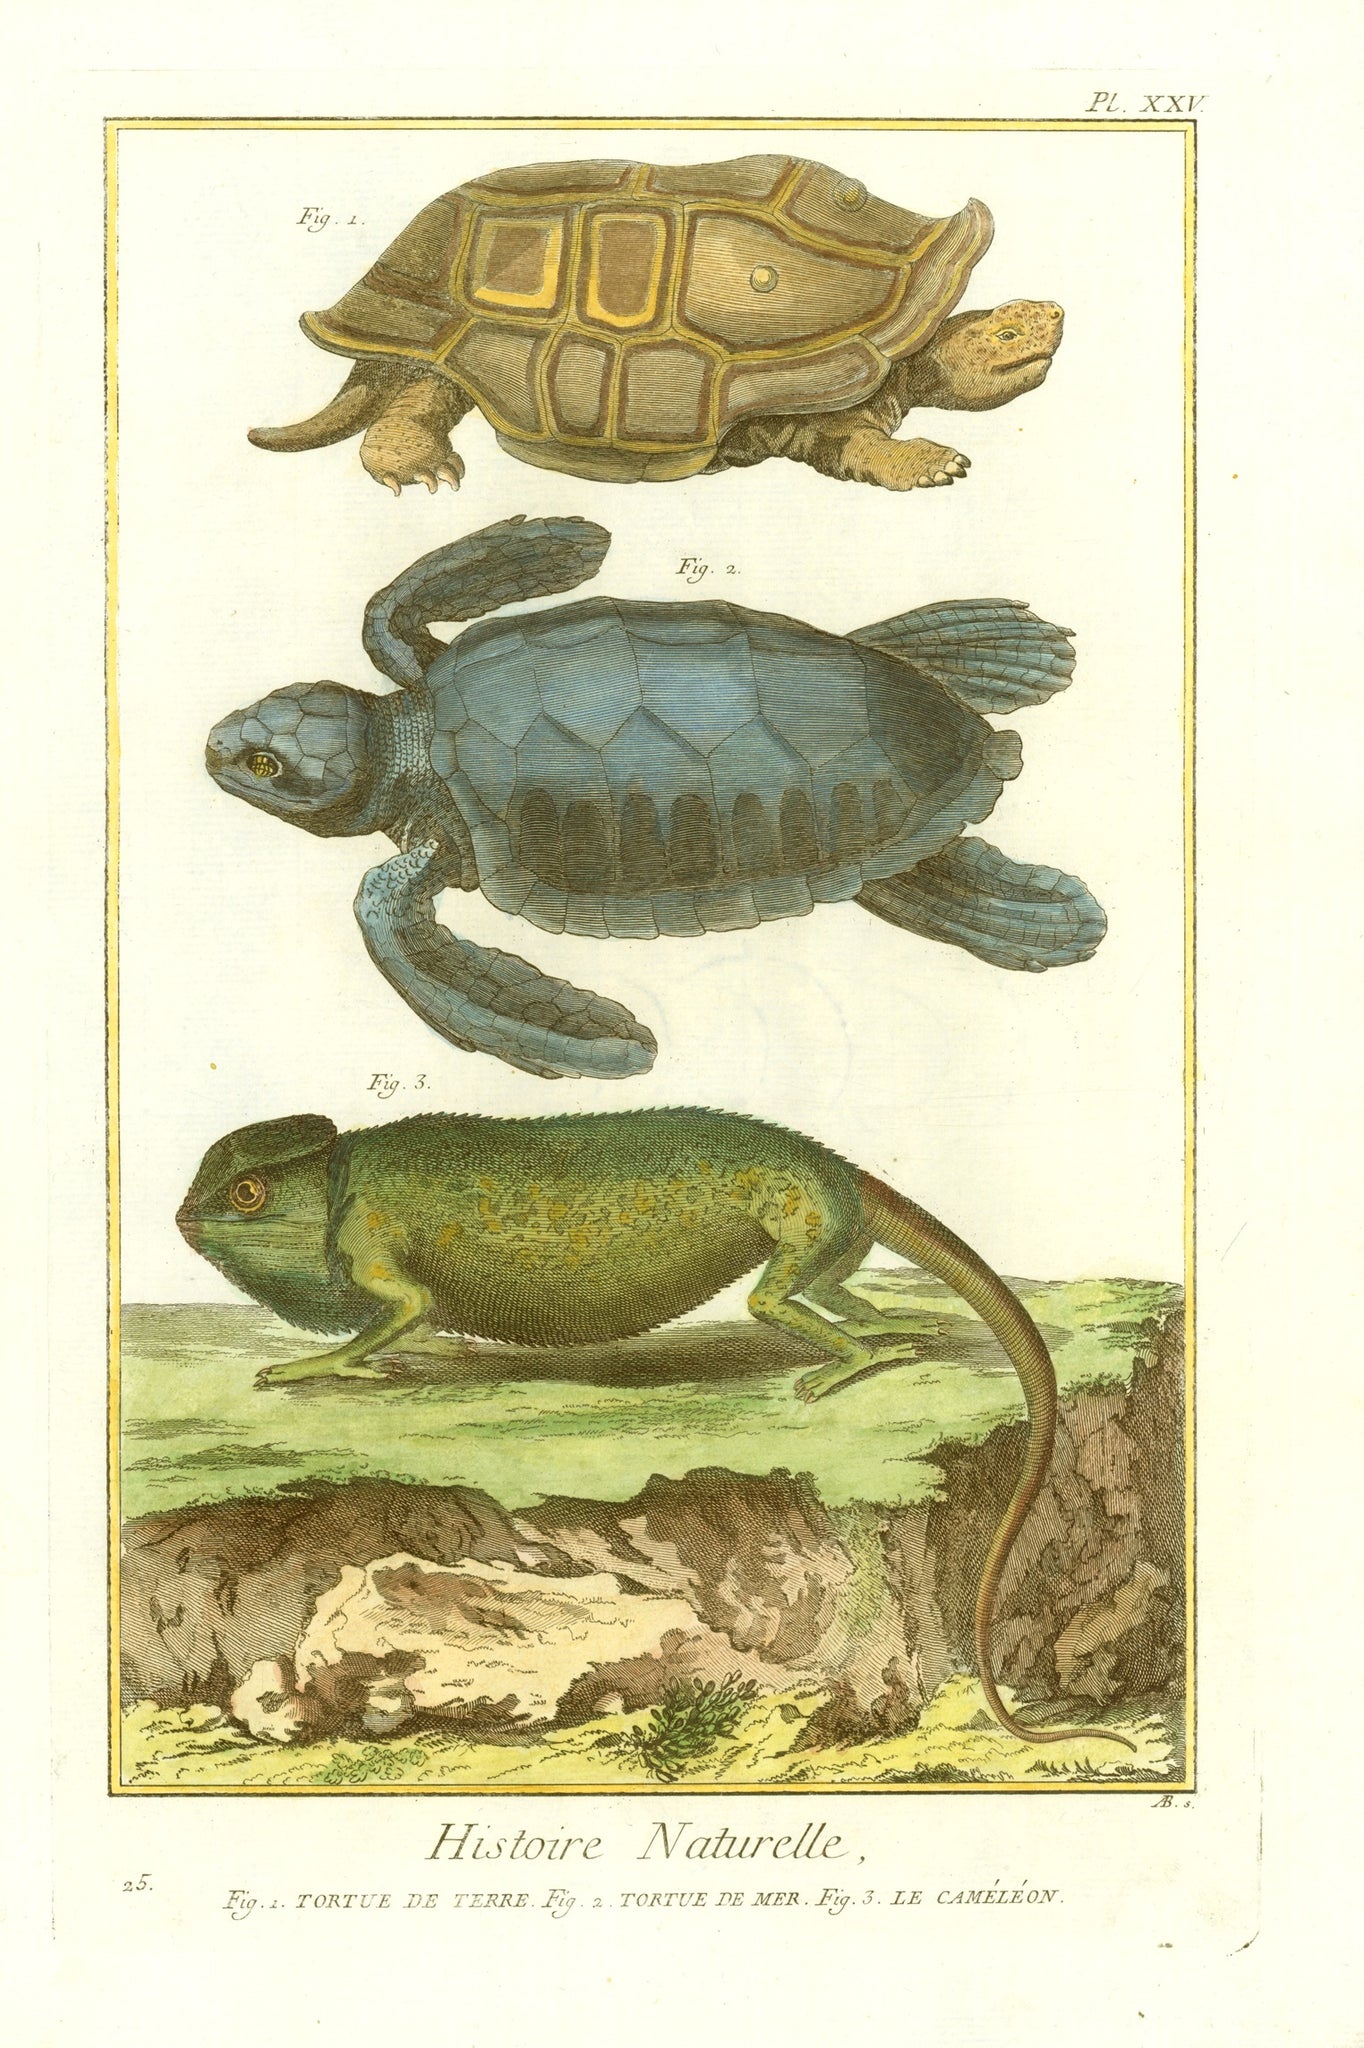 1. Tortue De Terre. 2. Tortue De Mer. 3. Le Cameleon.  Copper etching from "Histoire Naturelle" published 1751 in Paris. Reptiles, turtle